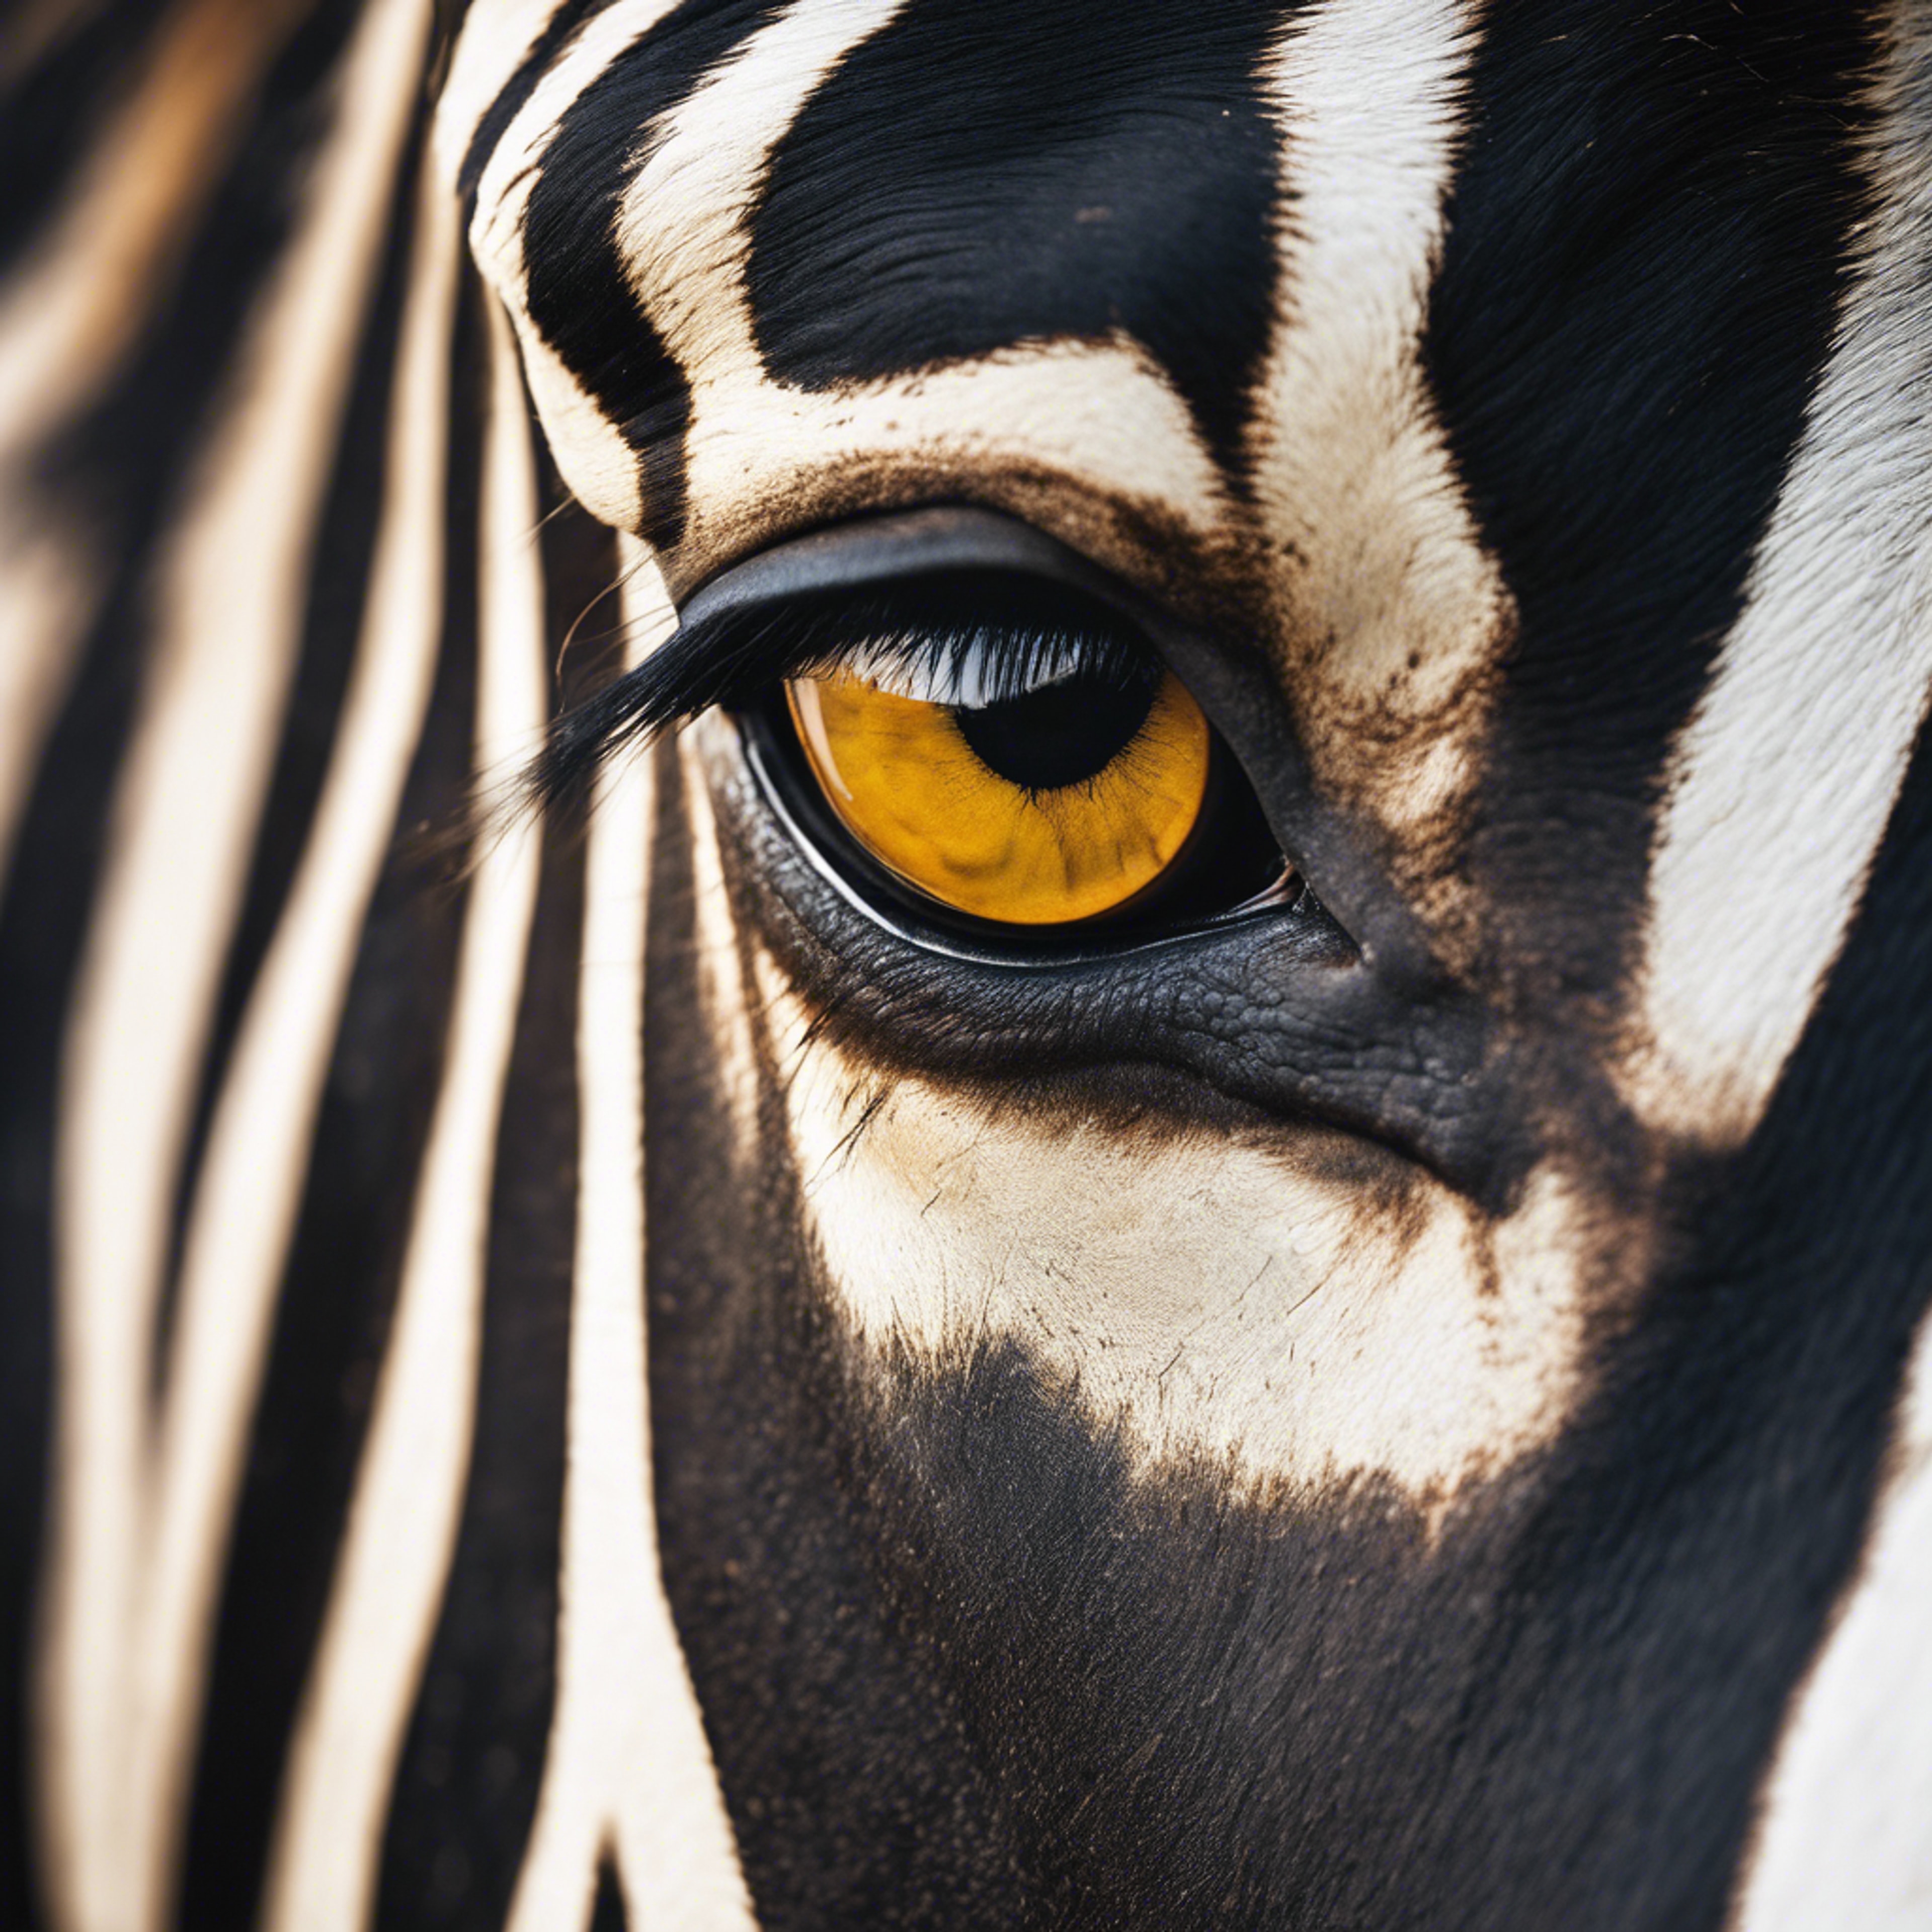 A closeup of a zebra's eye, showcasing its beautiful black and yellow striped pattern. Tapeta[50ee4a2668b0446d82c3]